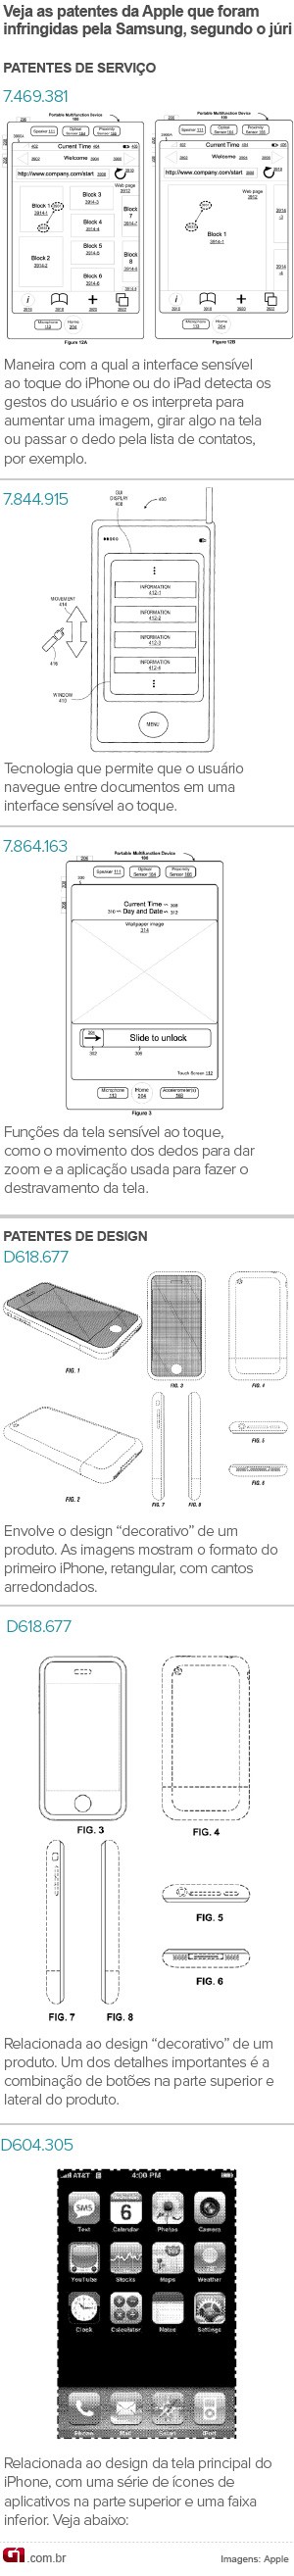 infográfico patentes apple samsung (Foto: Arte G1)